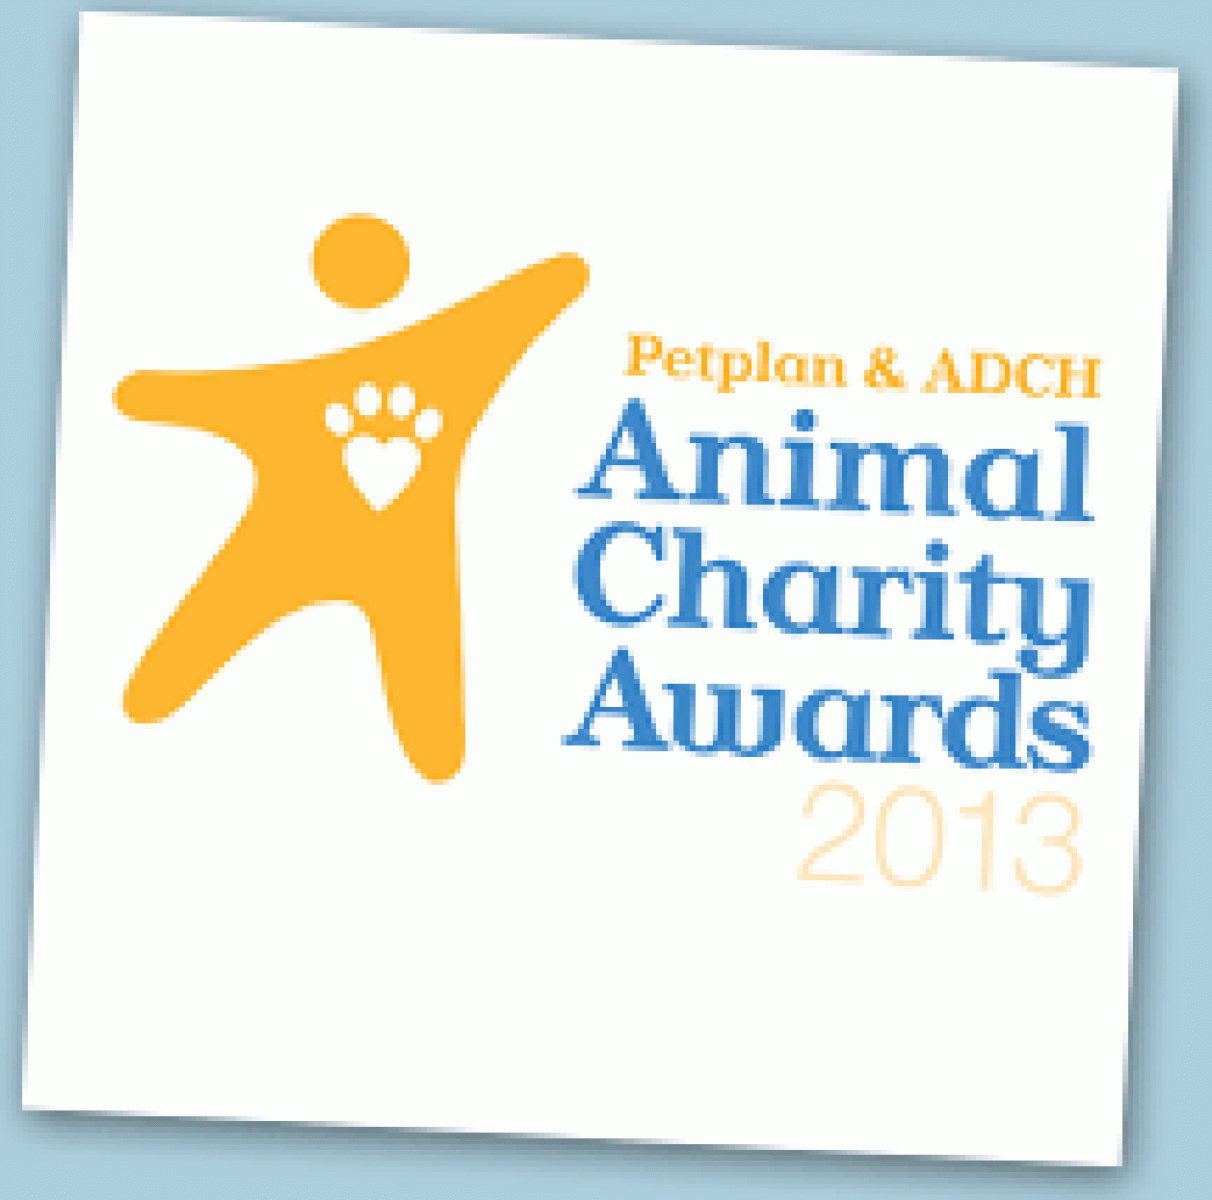 Petplan & ADCH Animal Welfare Awards 2013